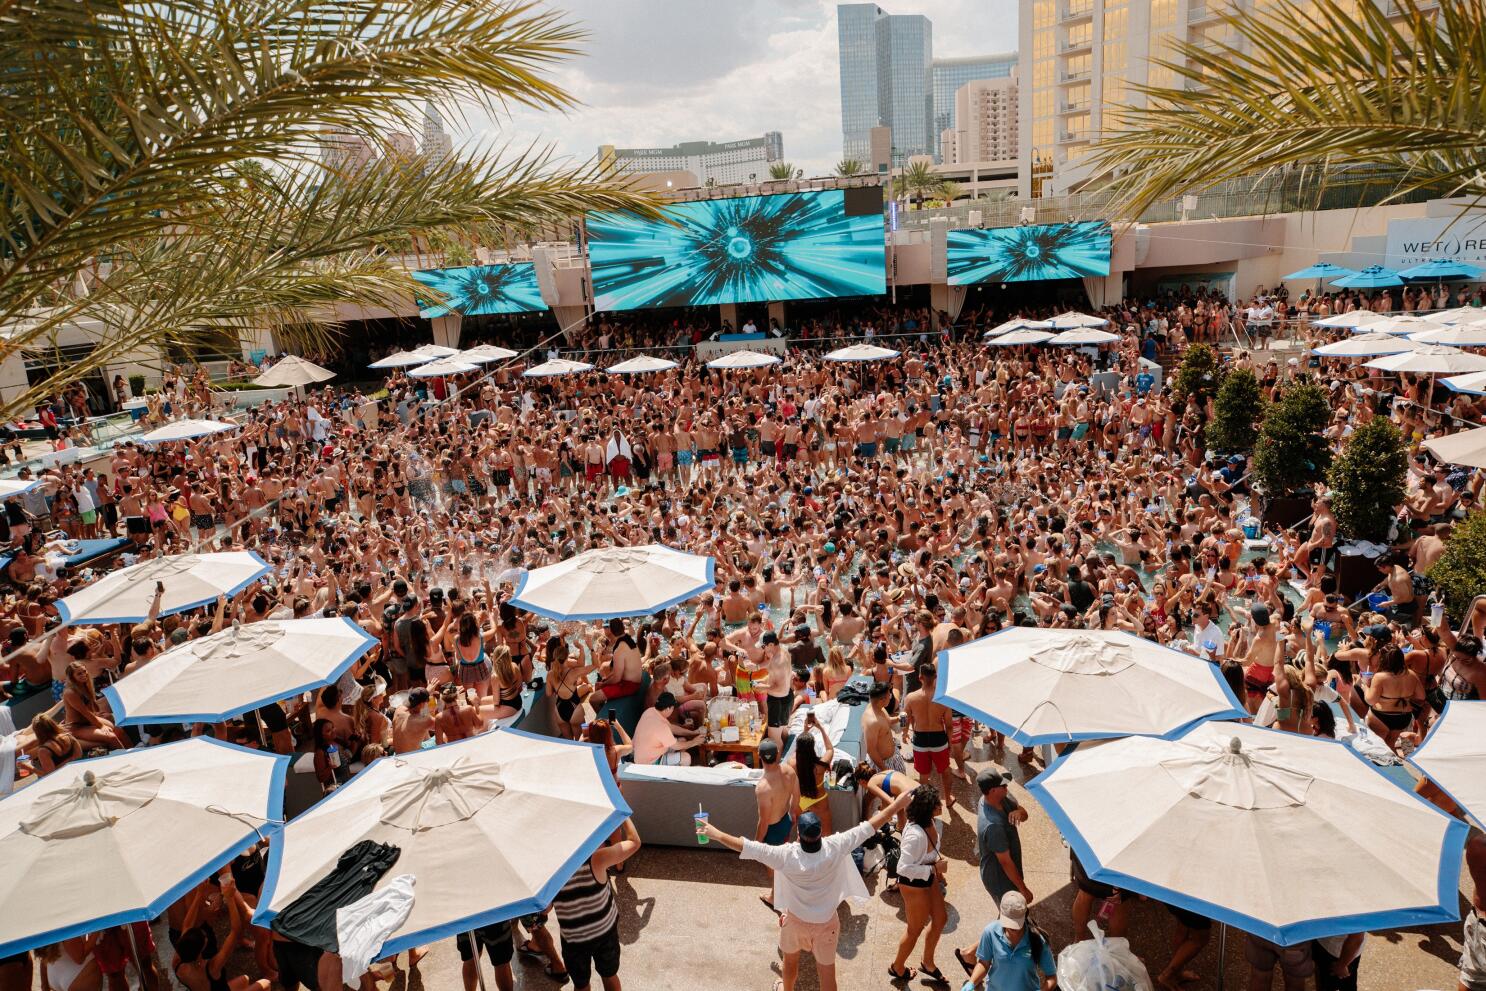 Wet Republic at MGM Grand – Events & FAQ – Las Vegas Pool Party